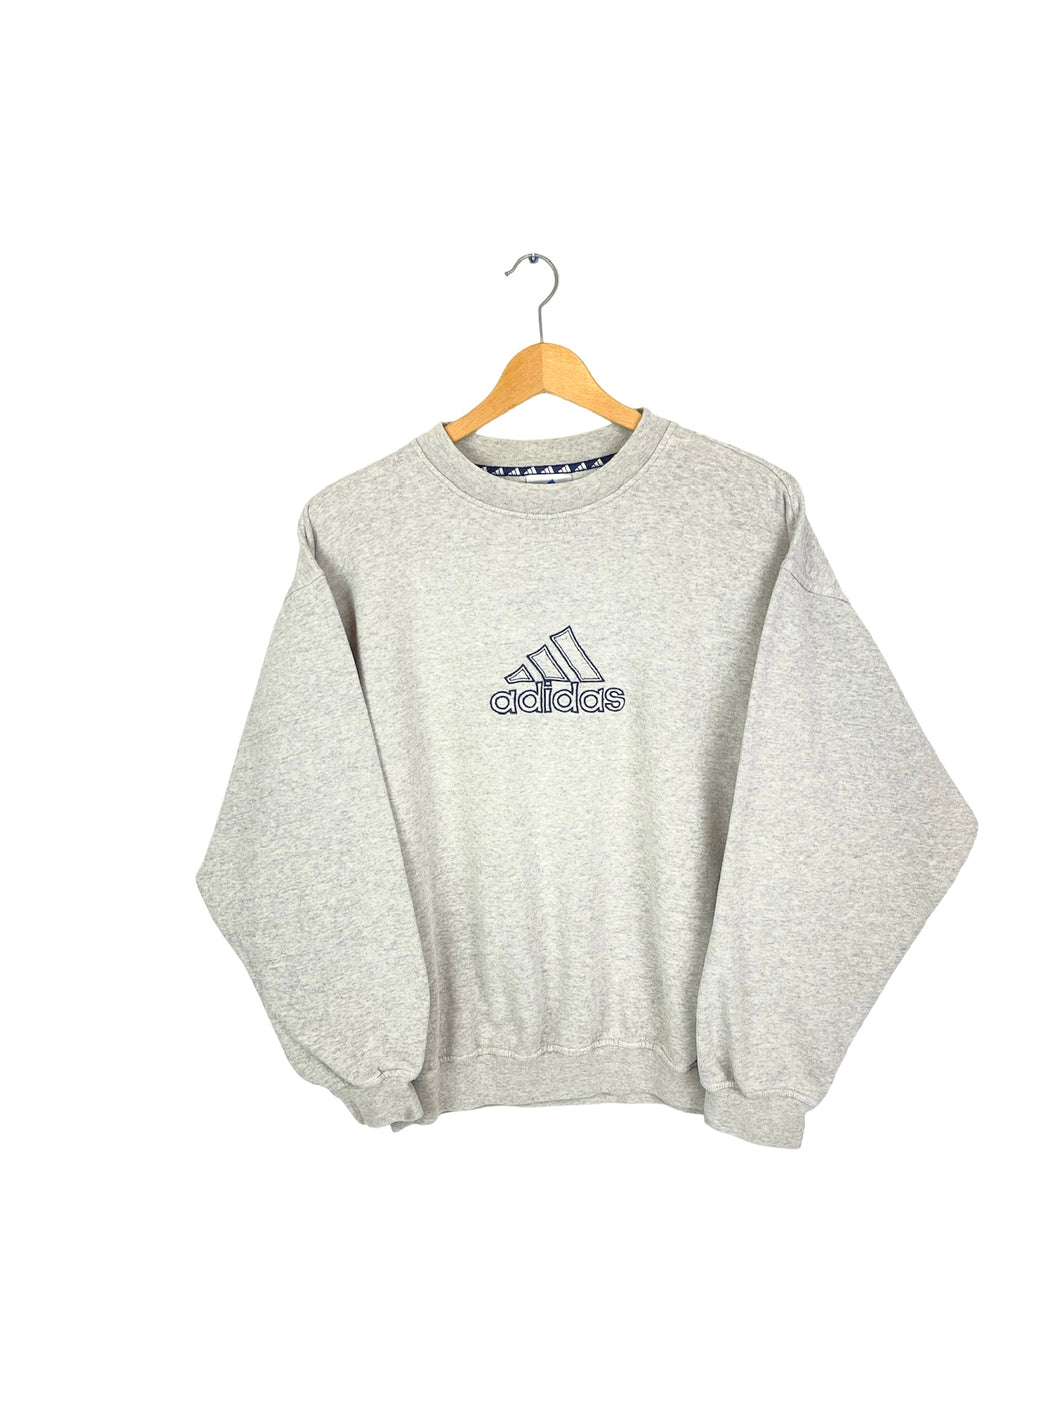 Adidas Sweatshirt - Medium